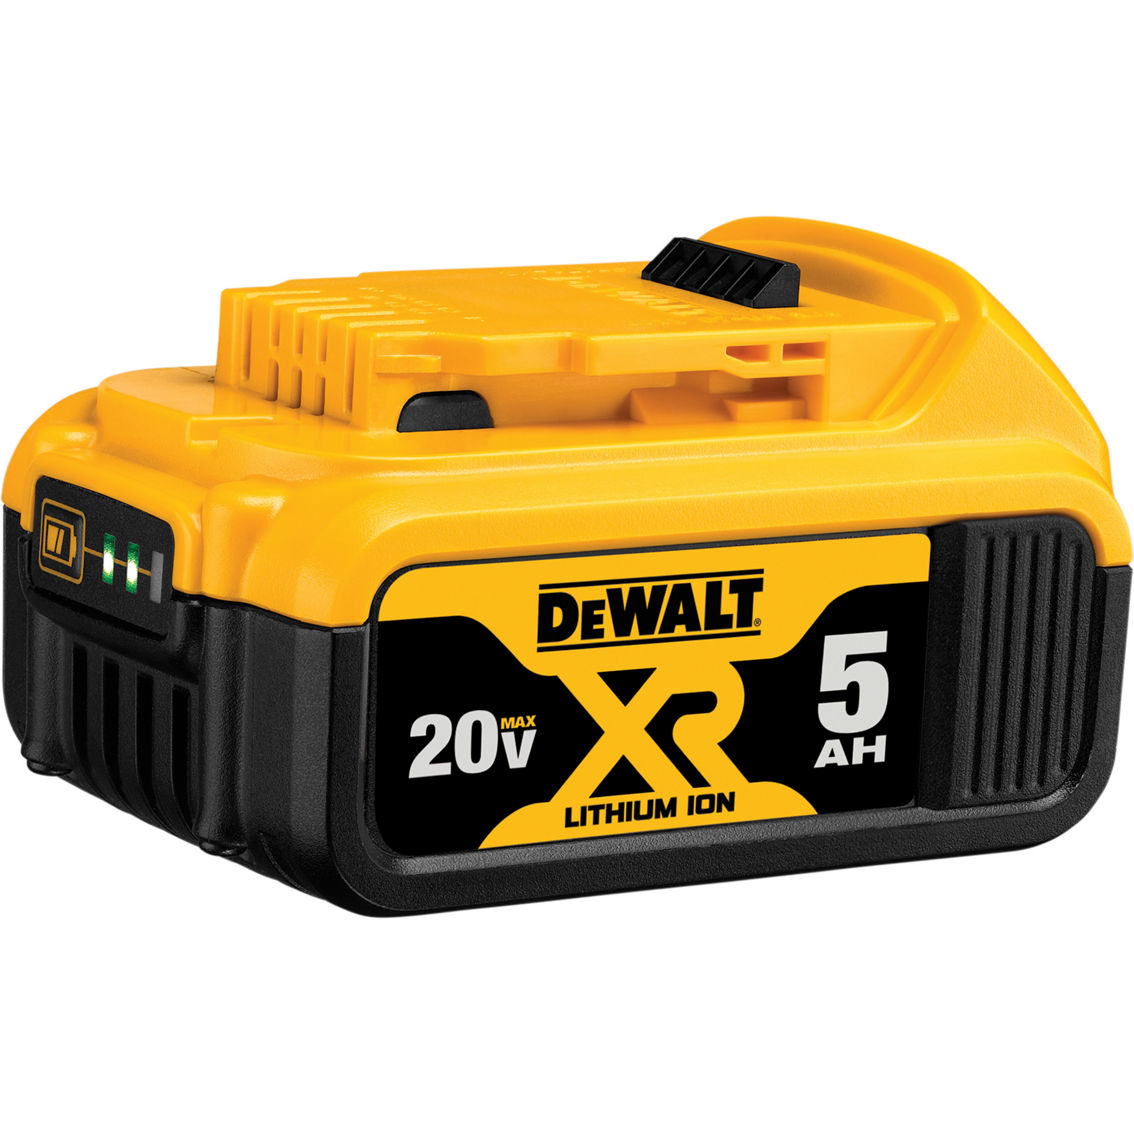 DeWalt DW 20V MAX Premium XR 5.0Ah Li-ion Battery Pack - Image 3 of 7